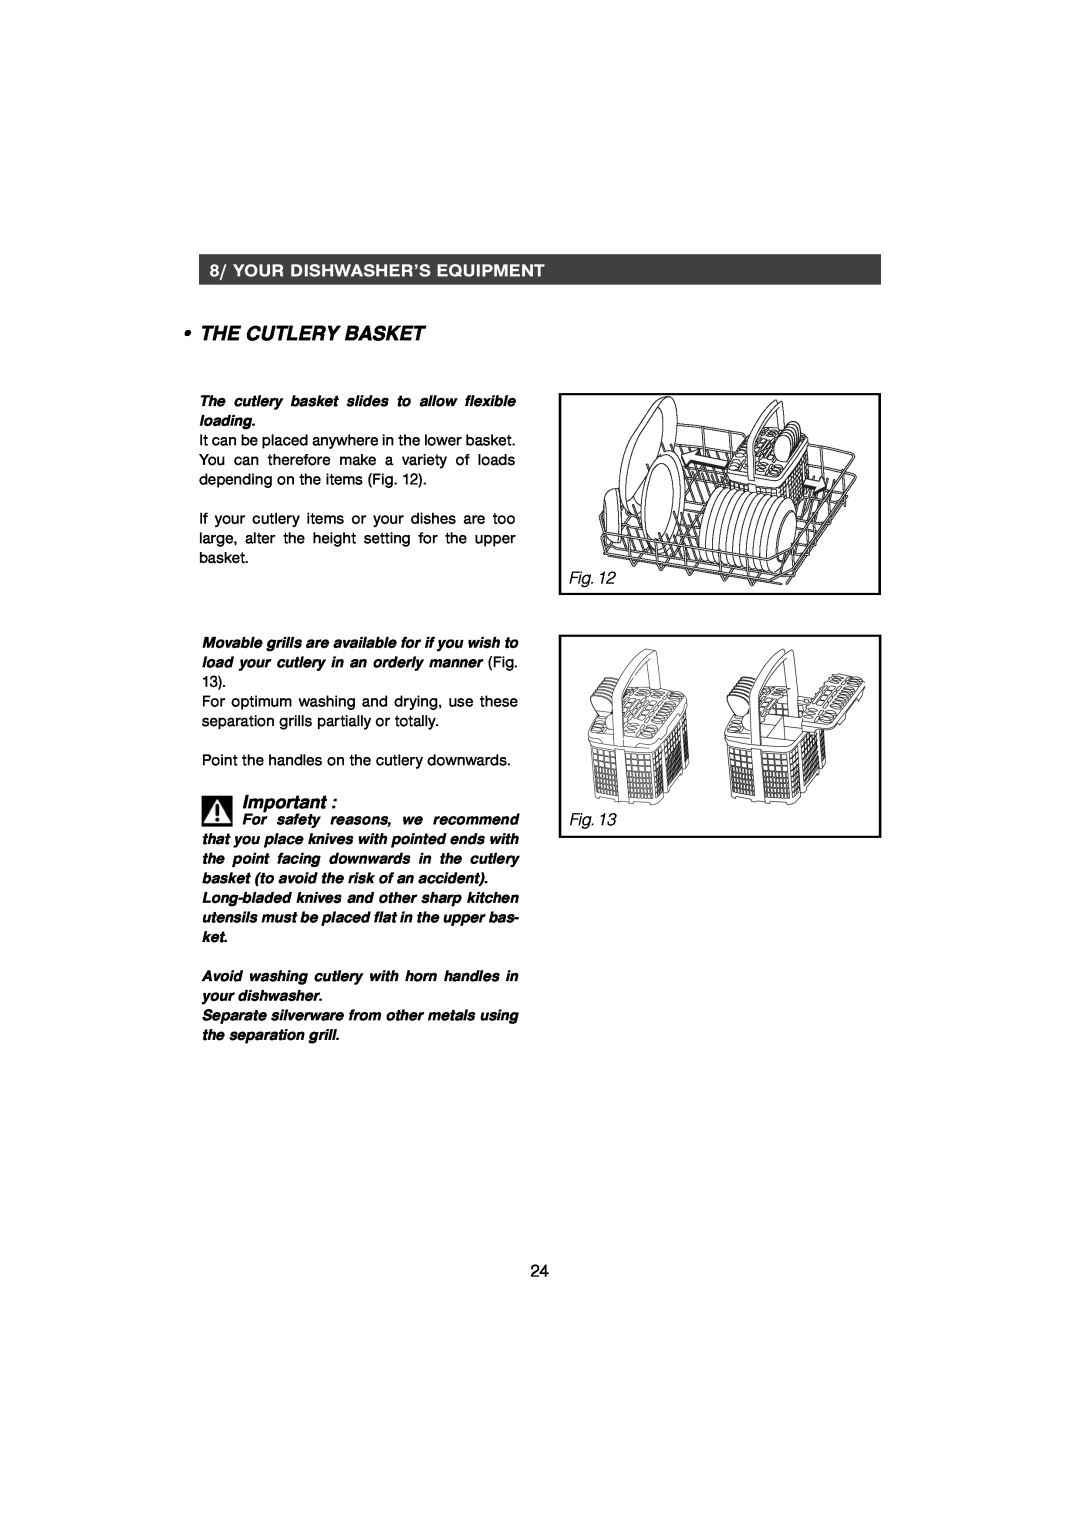 CDA WF250SS manual The Cutlery Basket, 8/ YOUR DISHWASHER’S EQUIPMENT 